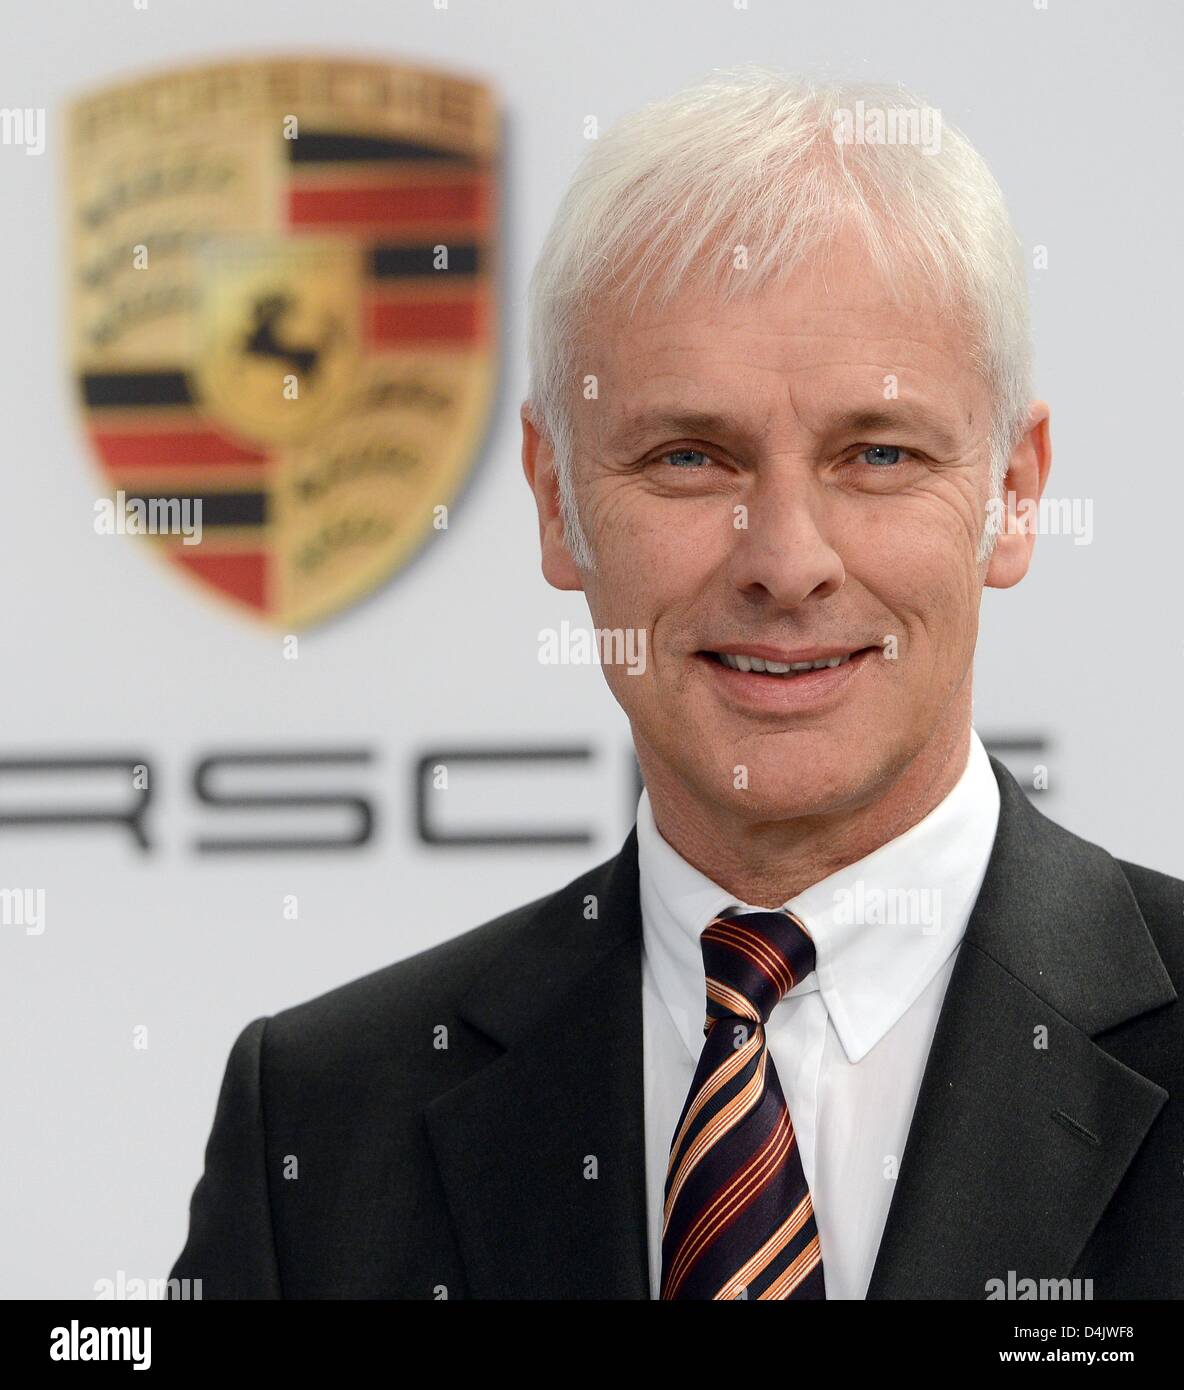 Matthias Müller, chairman of the sports <b>car builder</b> Porsche, is pictured in ... - matthias-mller-chairman-of-the-sports-car-builder-porsche-is-pictured-D4JWF8